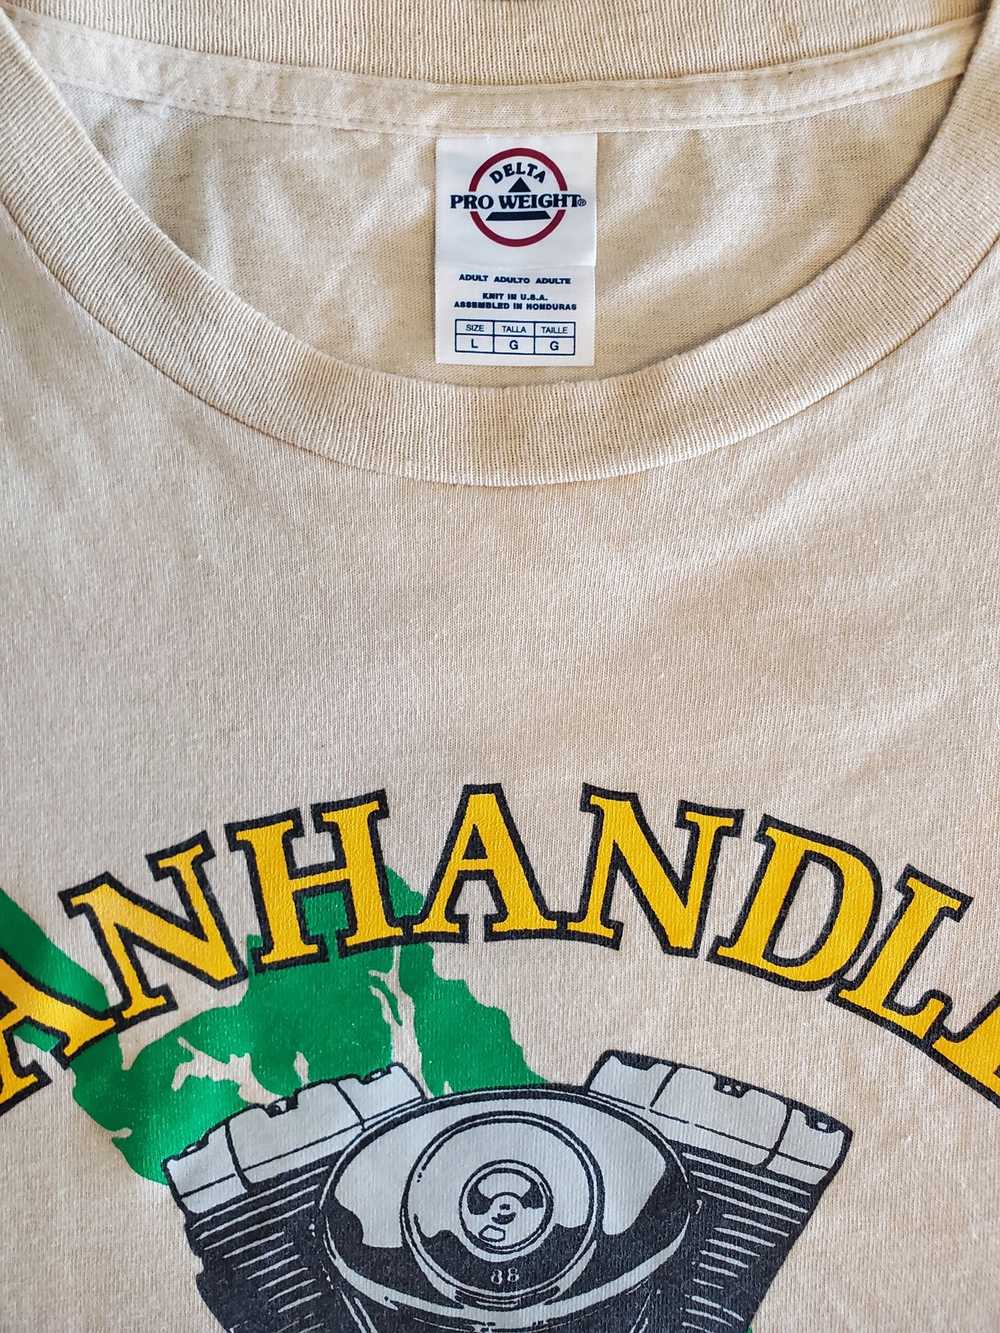 Other vintage travel Alaskan panhead t-shirt - image 3